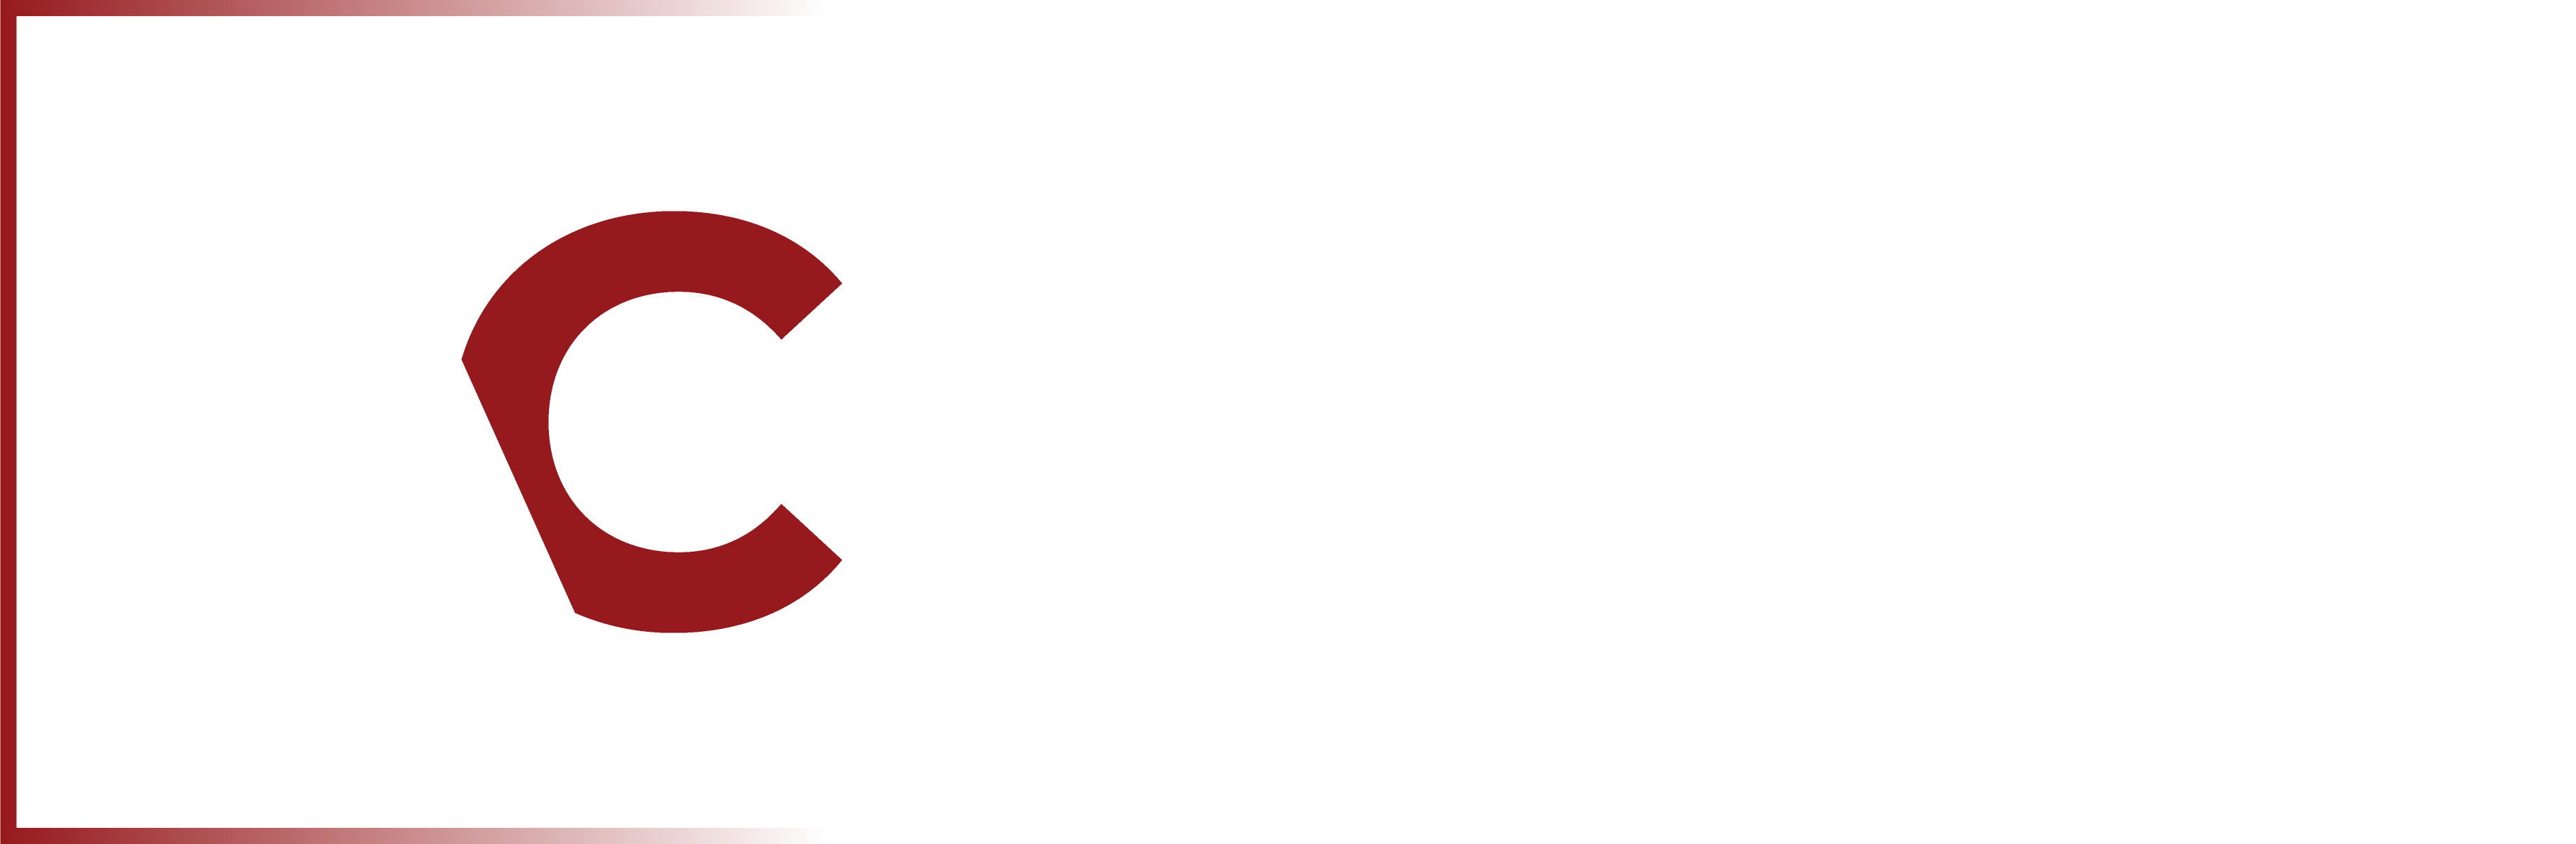 The AC Companies